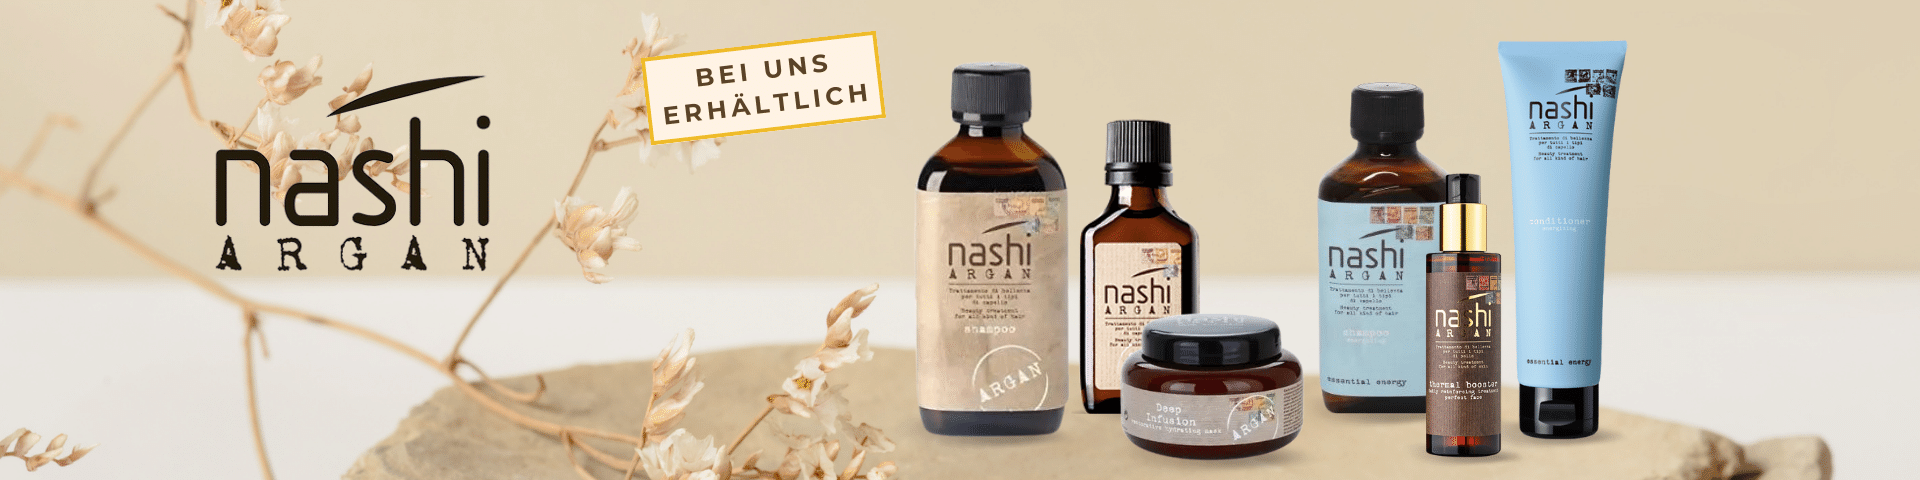 Nashi Argan Produkte bei Belando